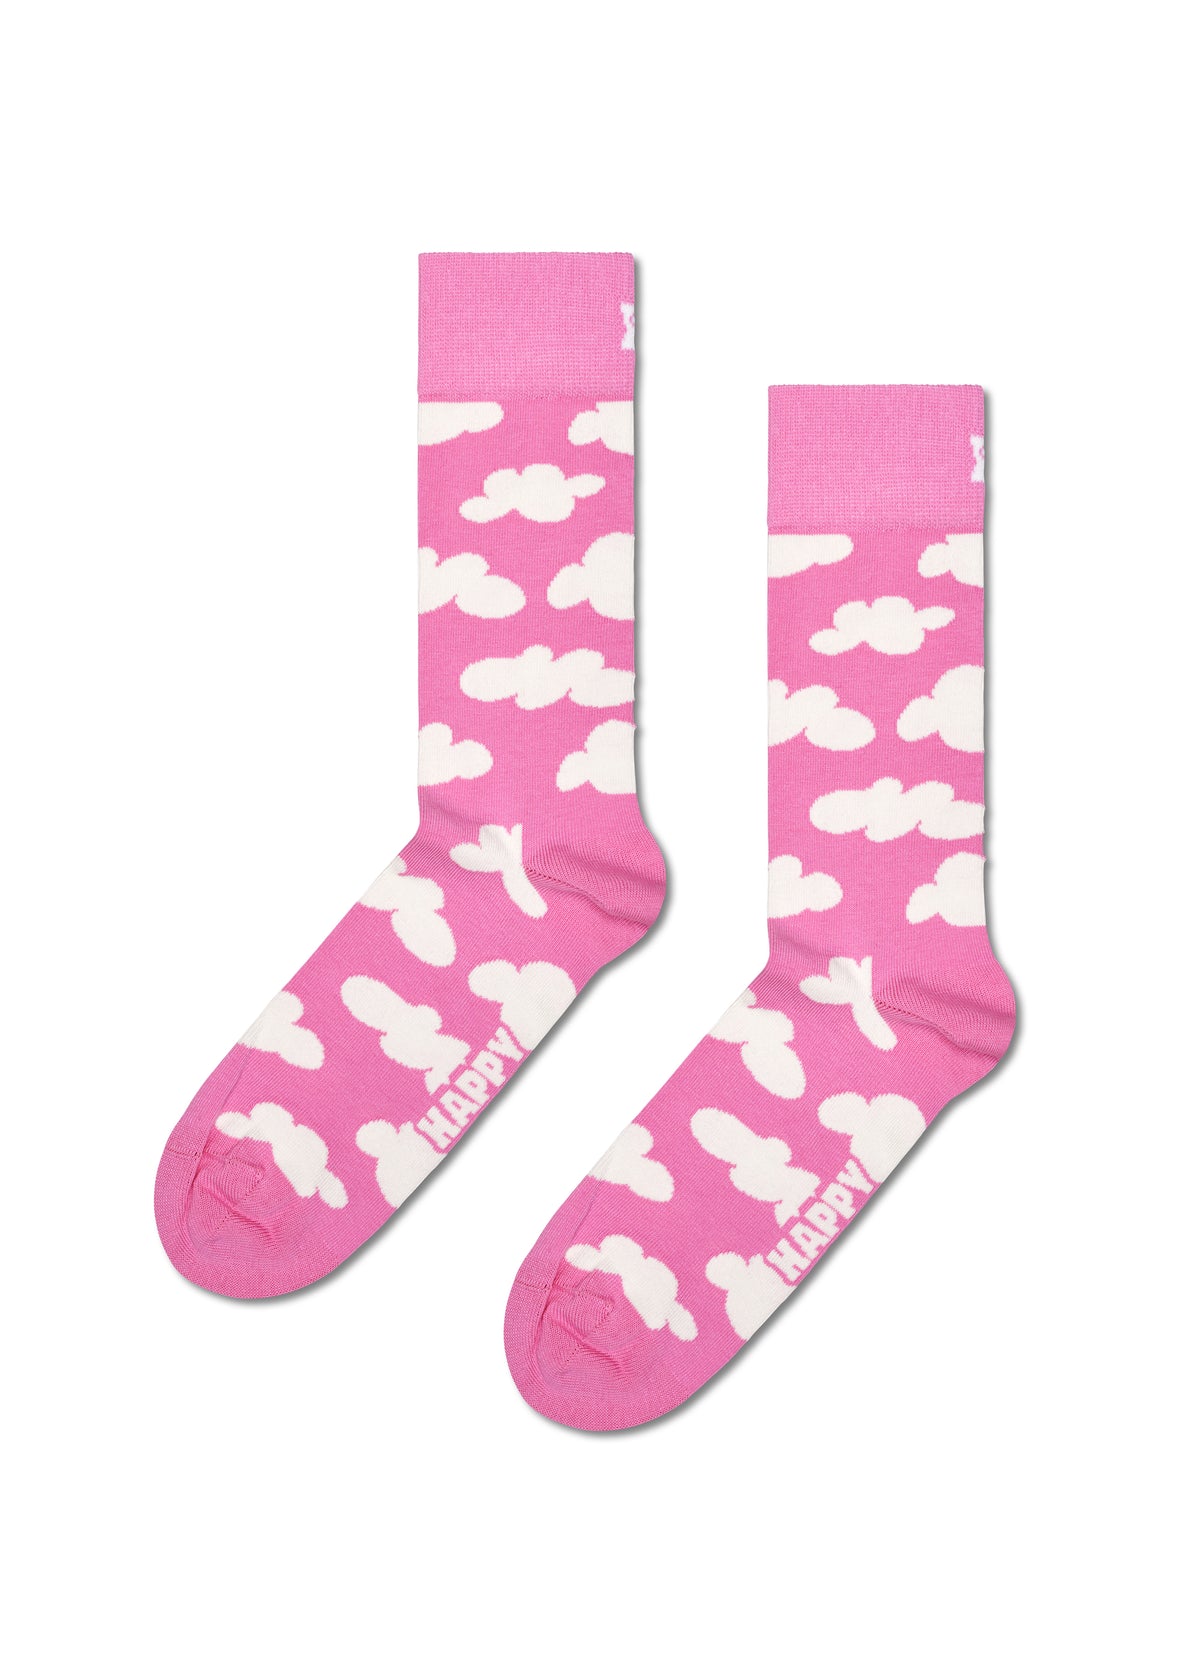 Adult socks - Cloudy Pink